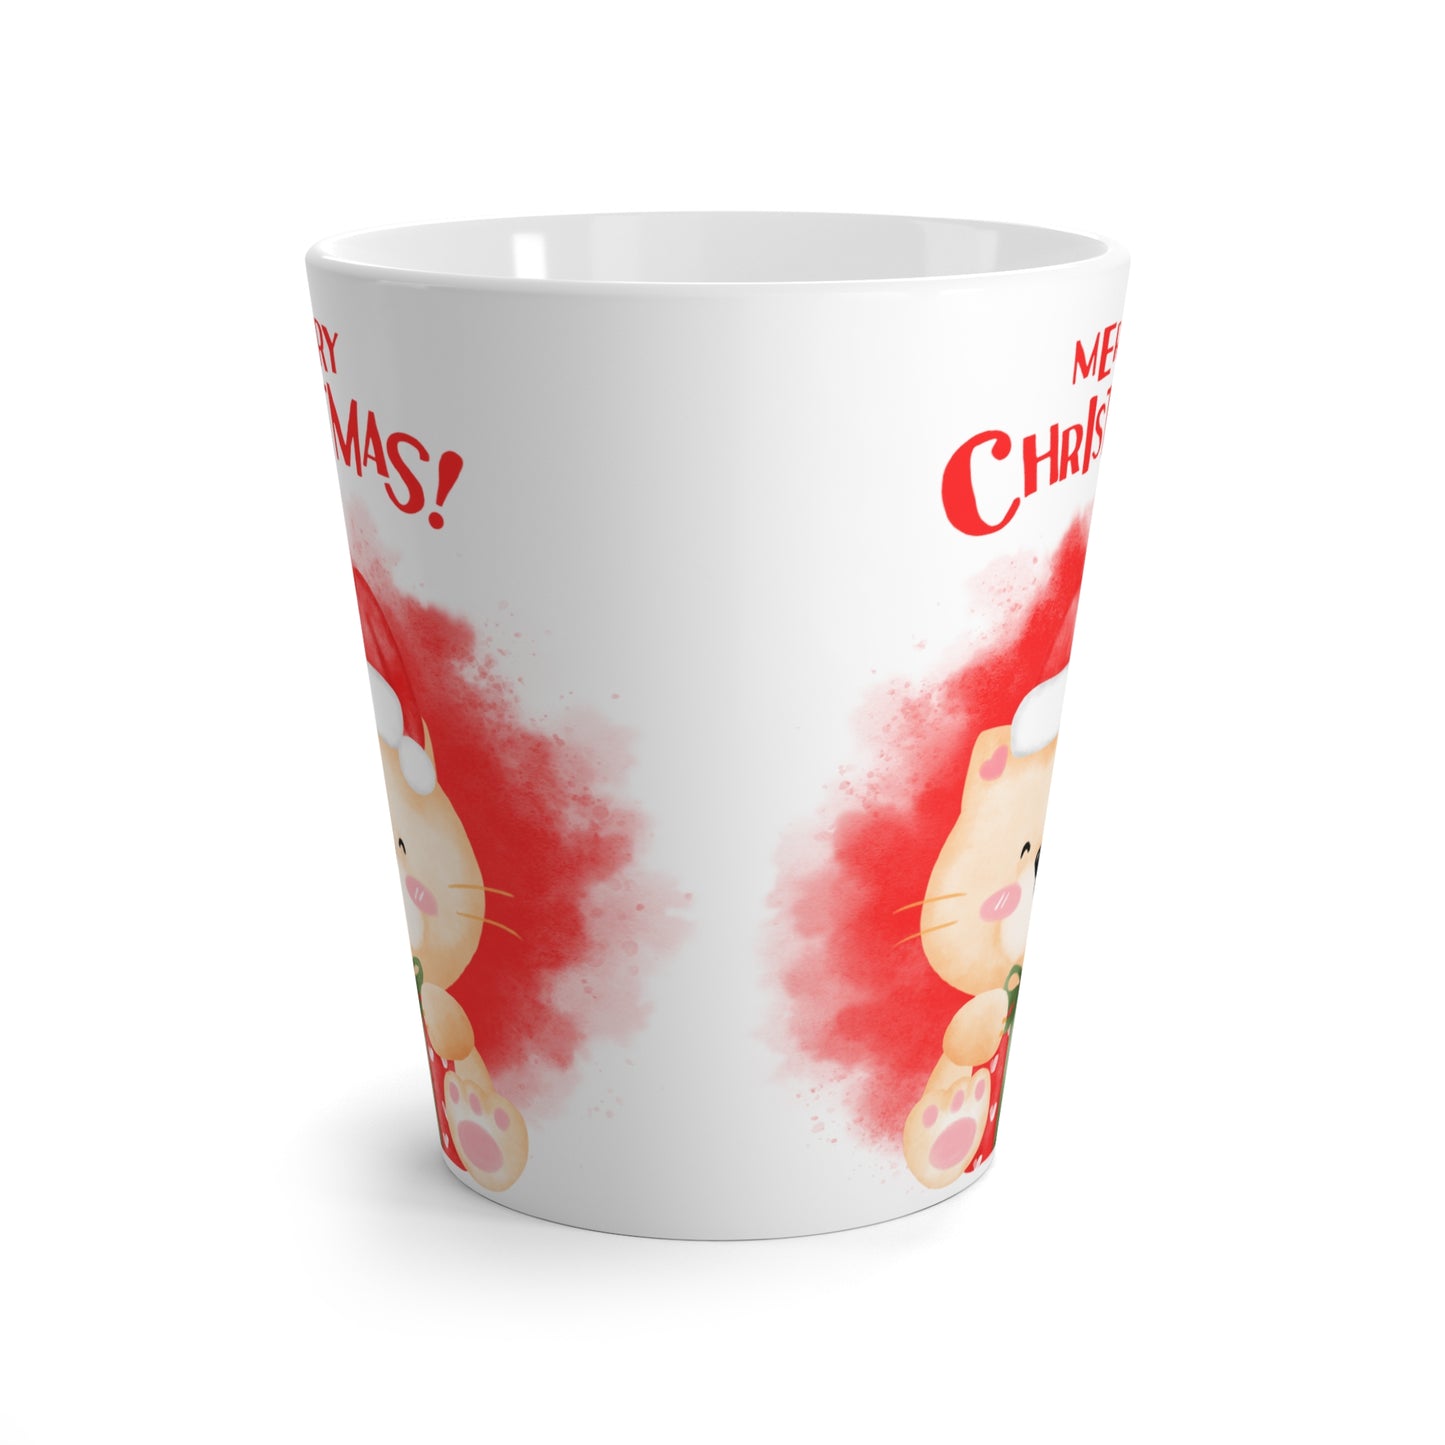 Merry Christmas Printed Latte Mug, 12oz, Red